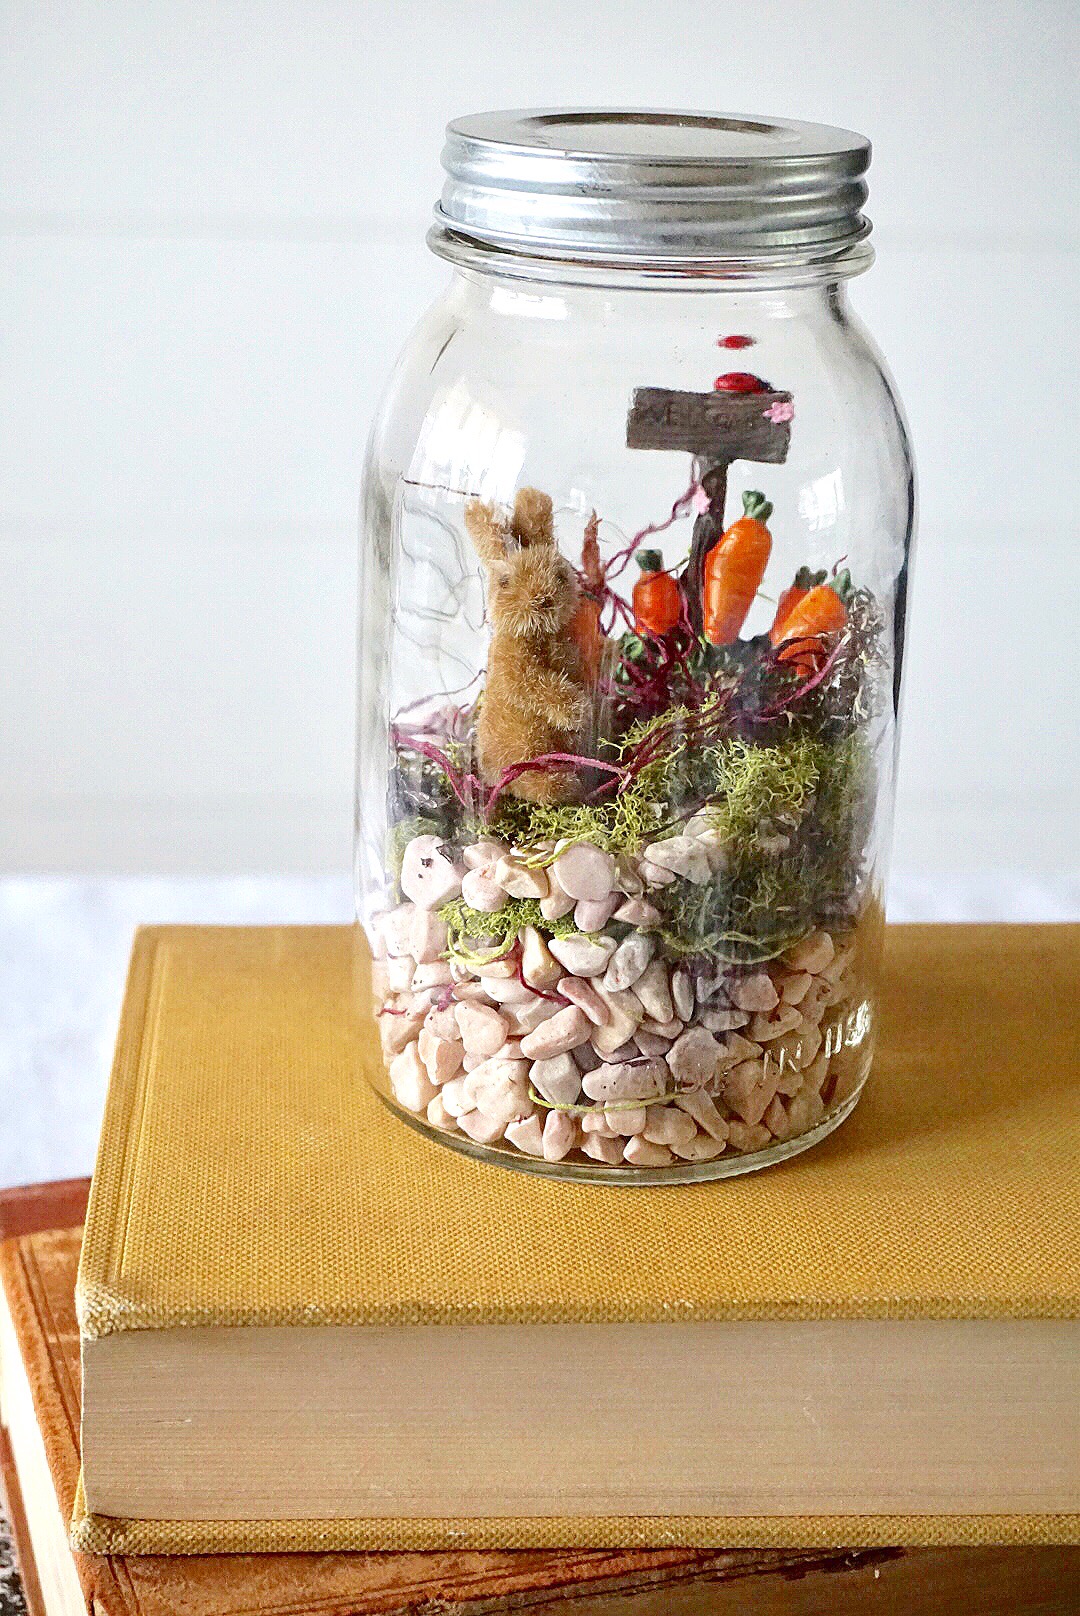  DIY Mason Jar Easter Fairy Garden Terrarium made with bunny figurines and moss. 